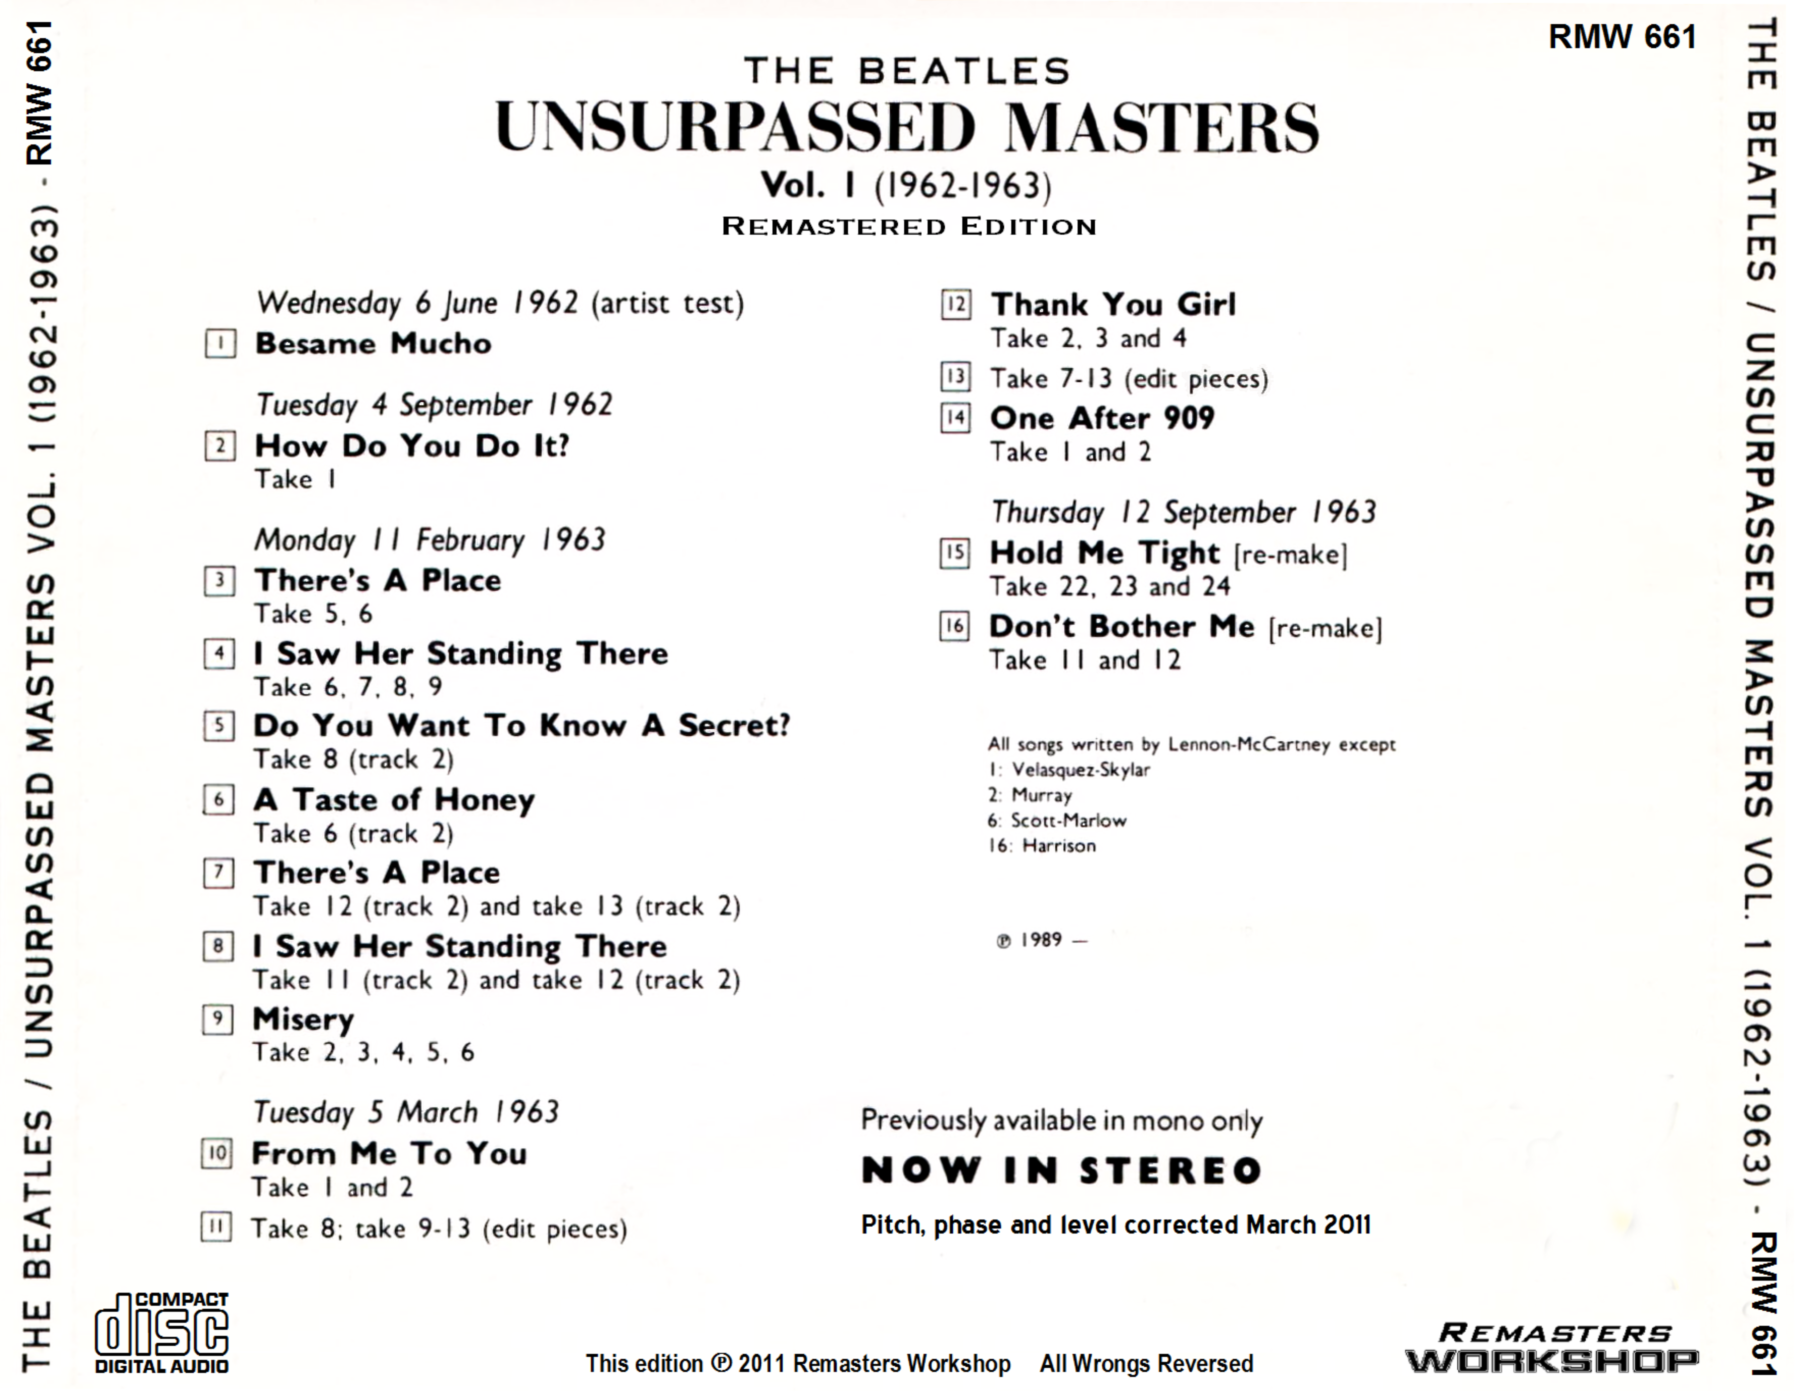 Beatles196xUnsurpassedMastersVol1 (1).png